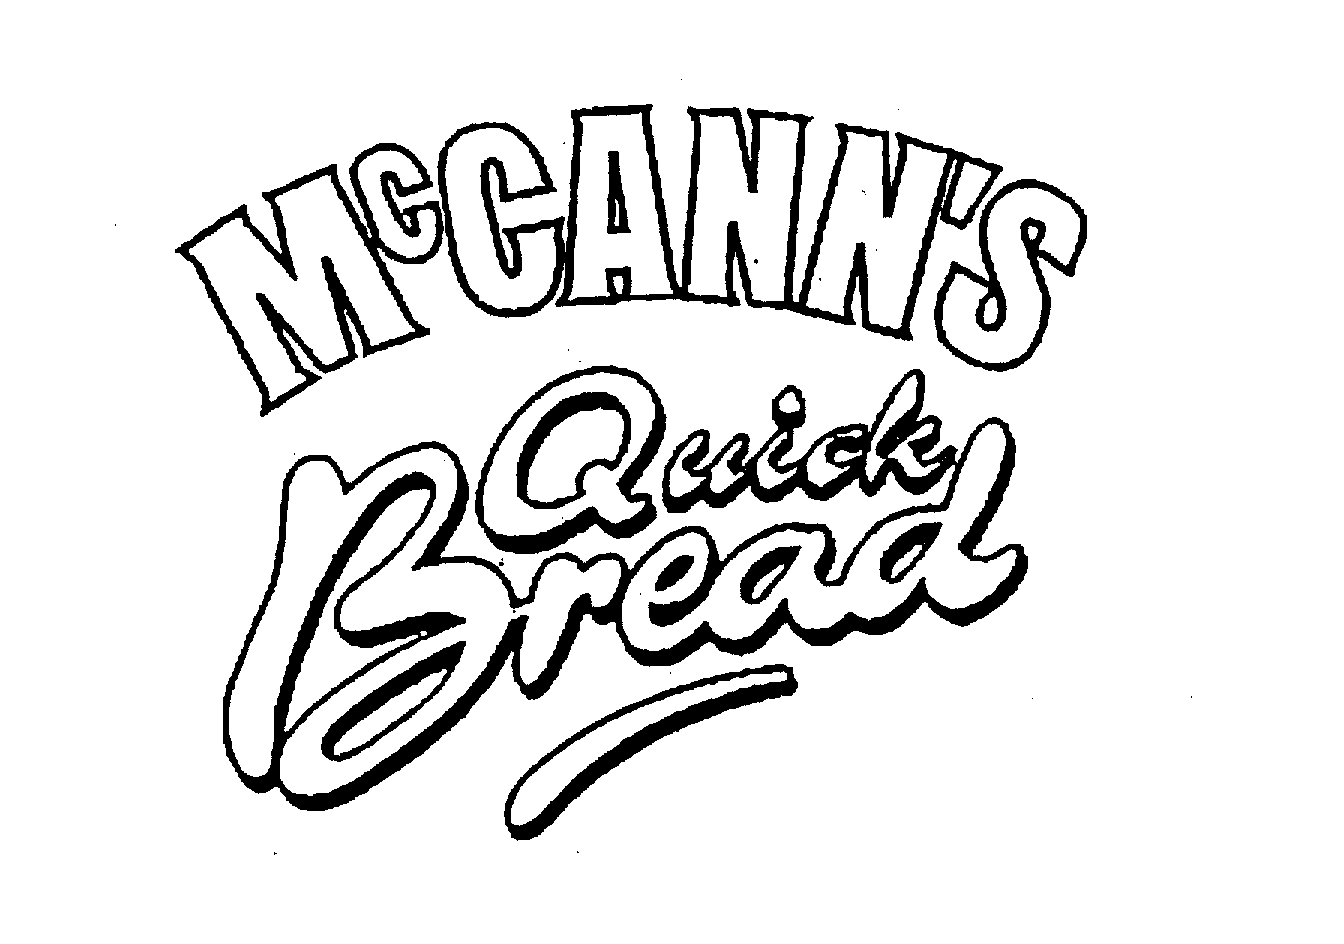  MCCANN'S QUICK BREAD